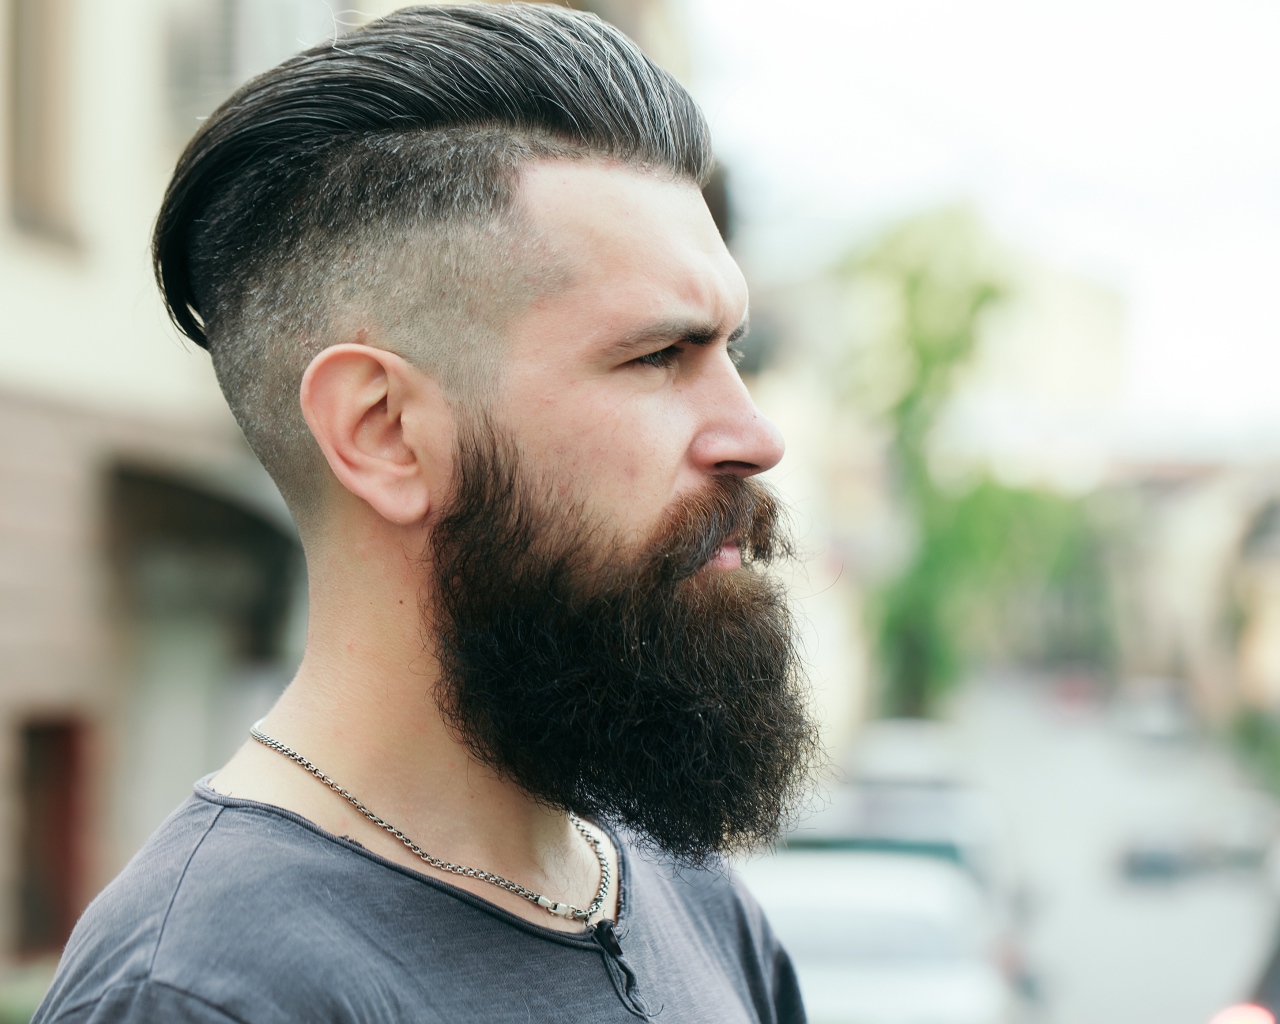 Stylish man with a beard and hair on his head